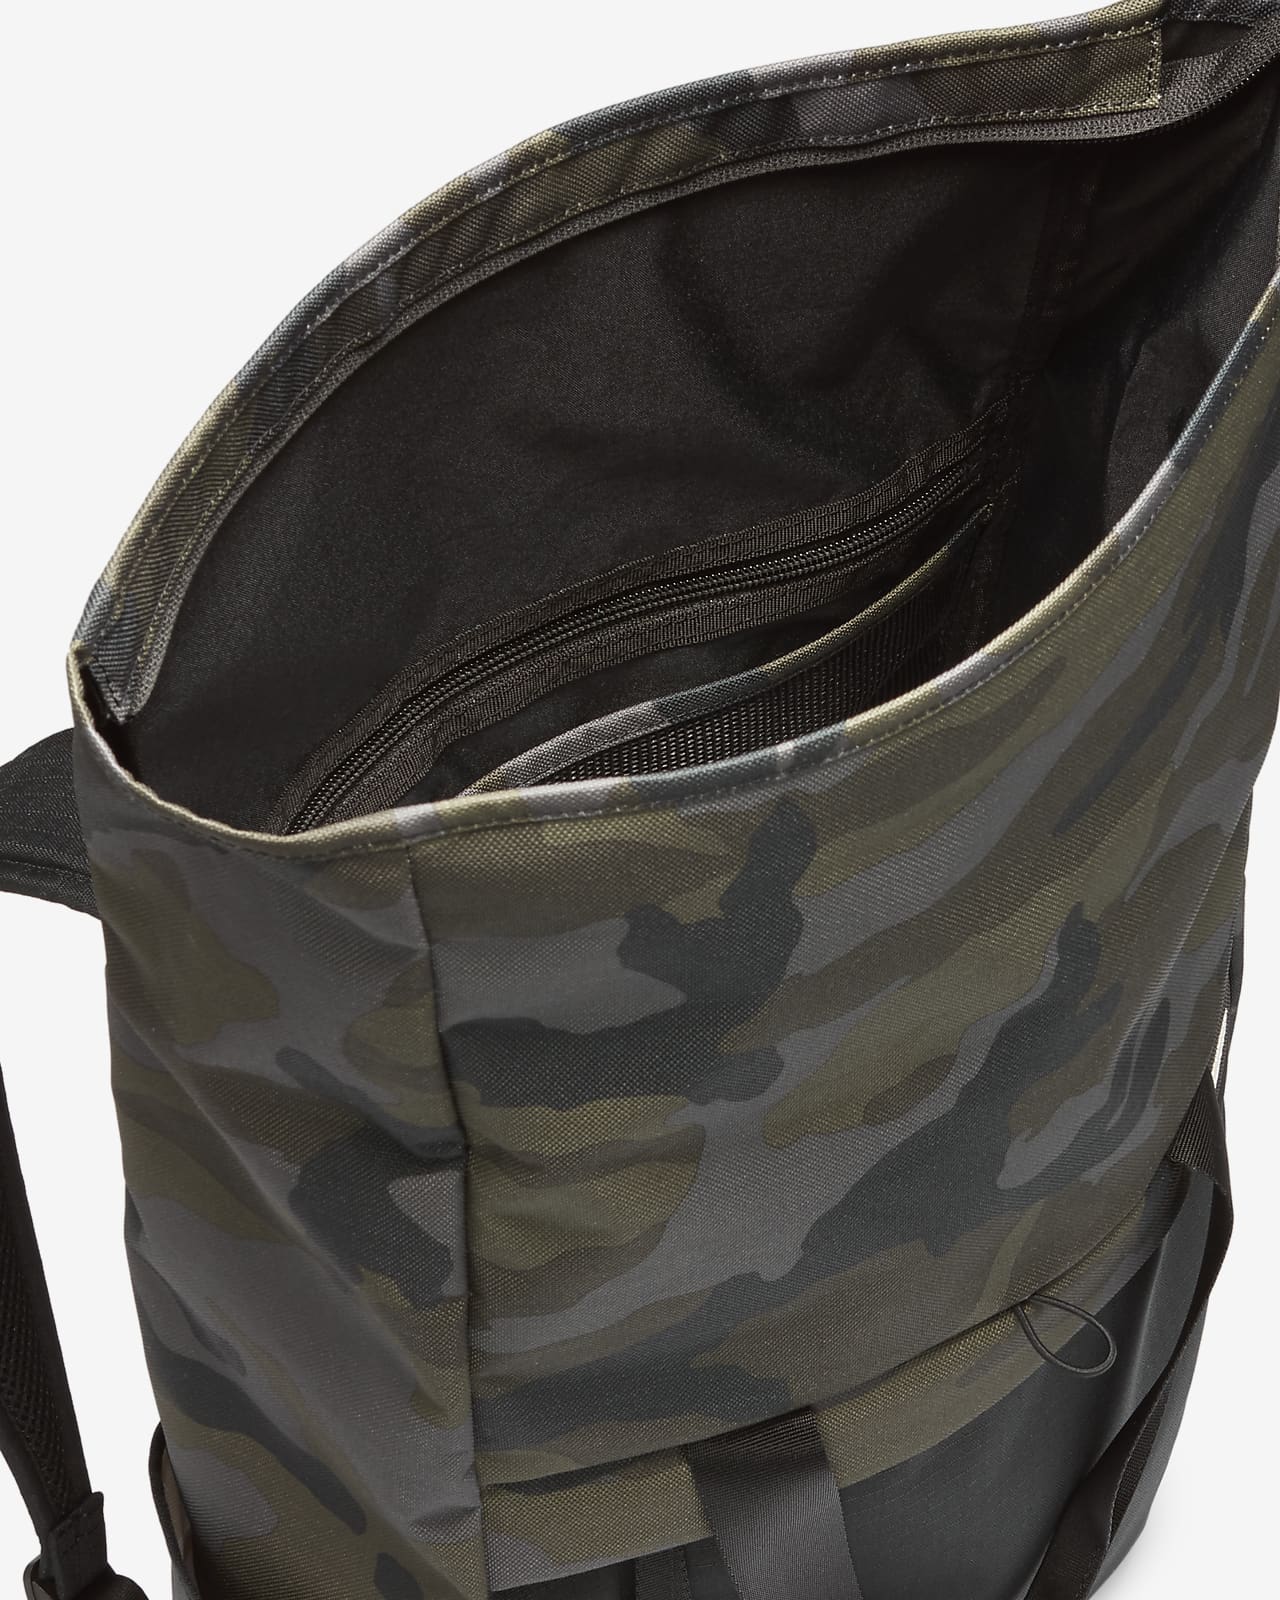 Nike Air Force tote bag in Camo